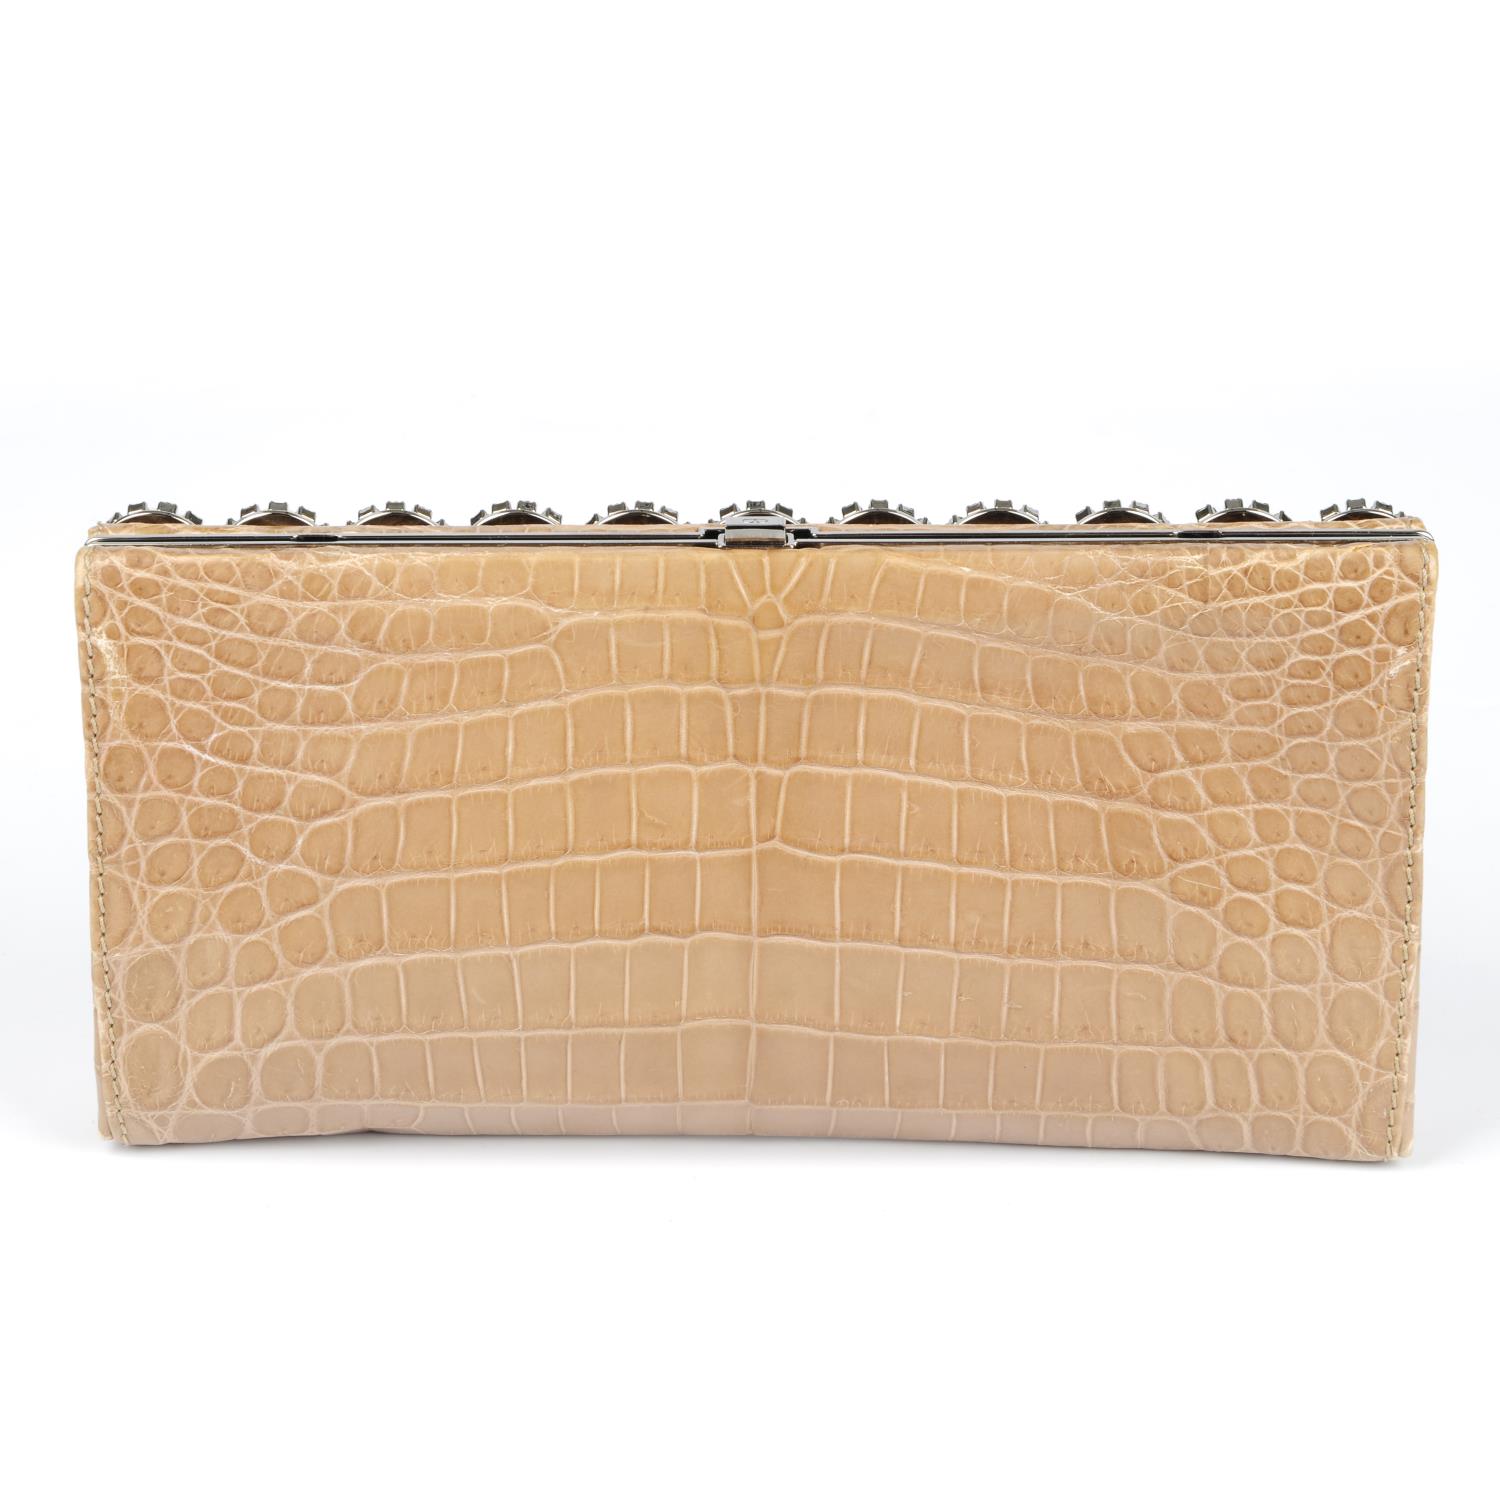 VALENTINO - a cultured pearl, rhinestone embellished crocodile clutch. - Image 2 of 3